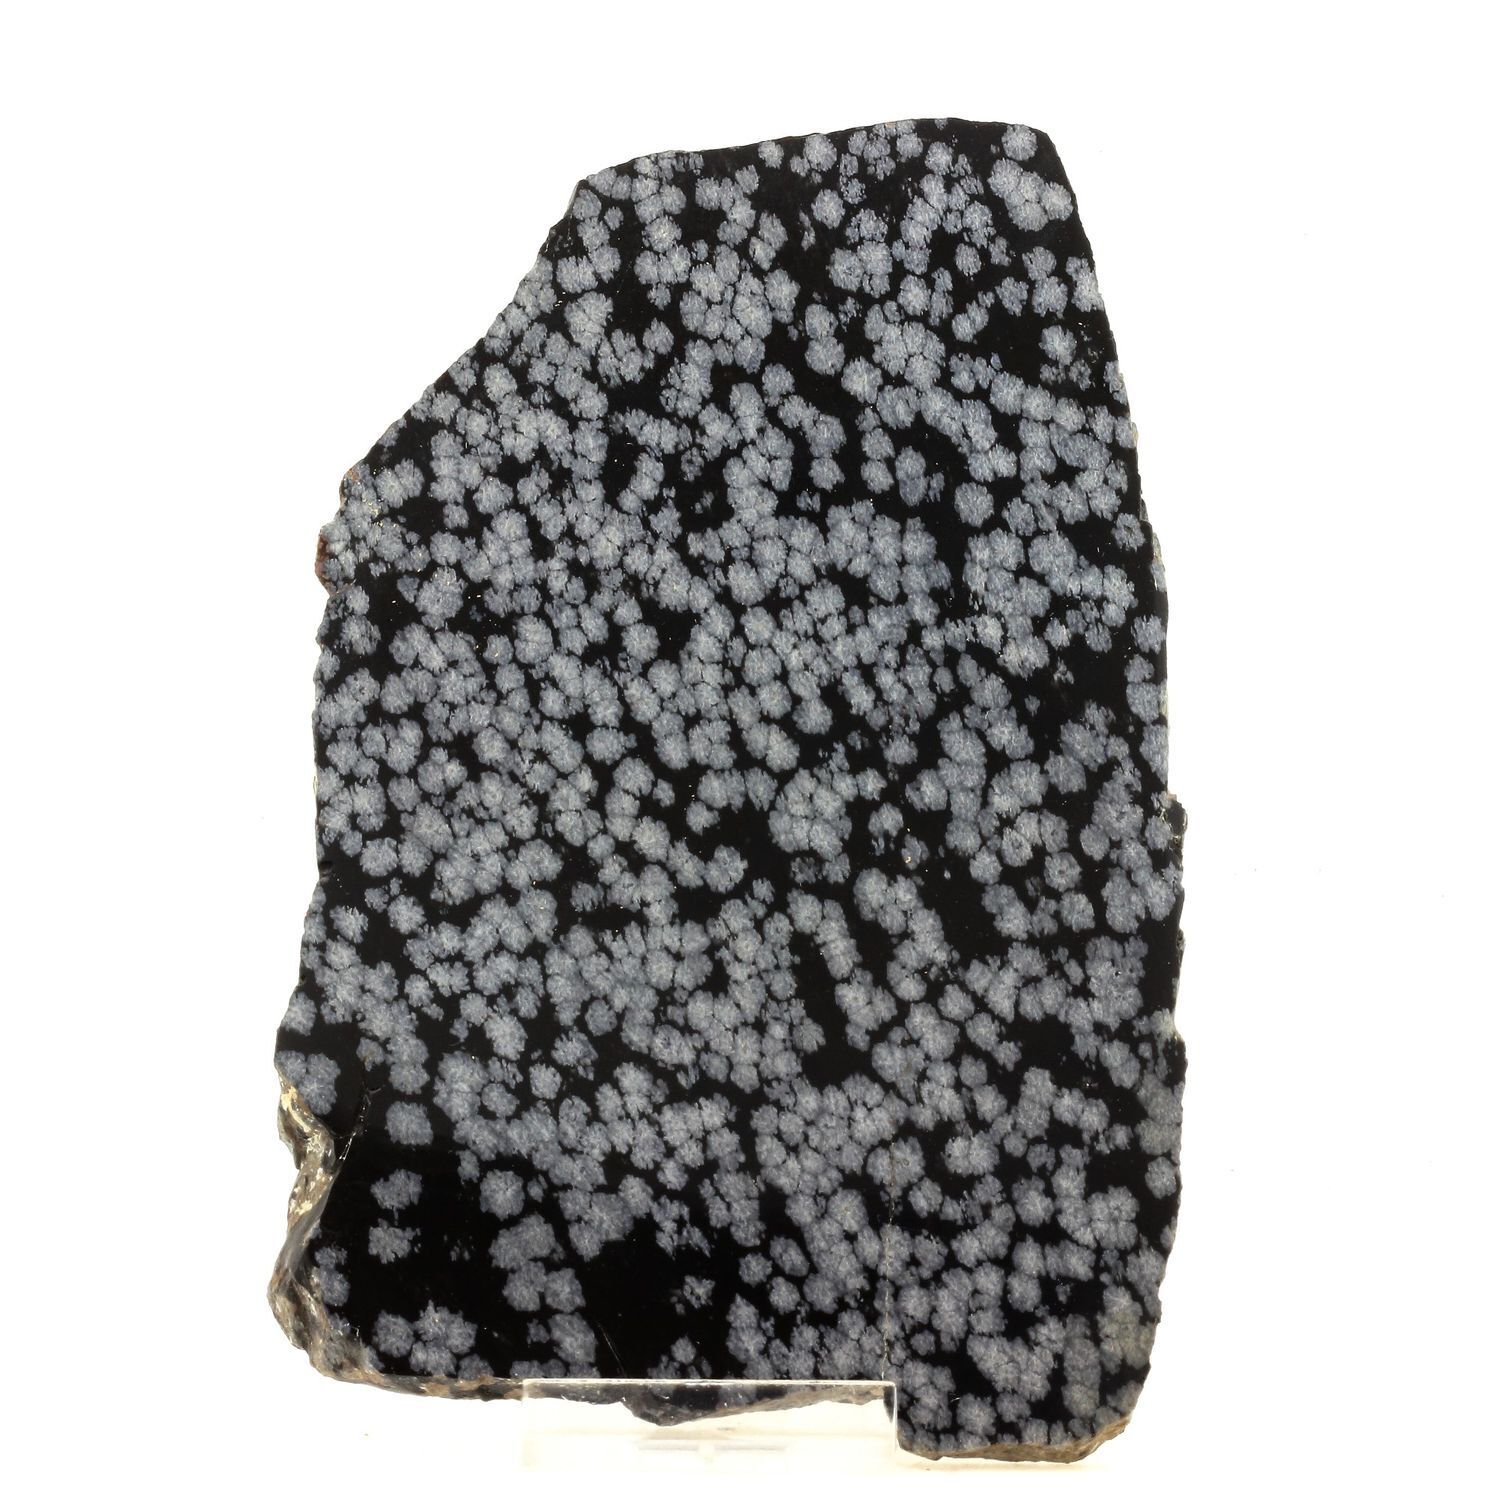 Snowflake Obsidian + Cristobalite. 1125.5 ct. Black Spring, Utah, USA.